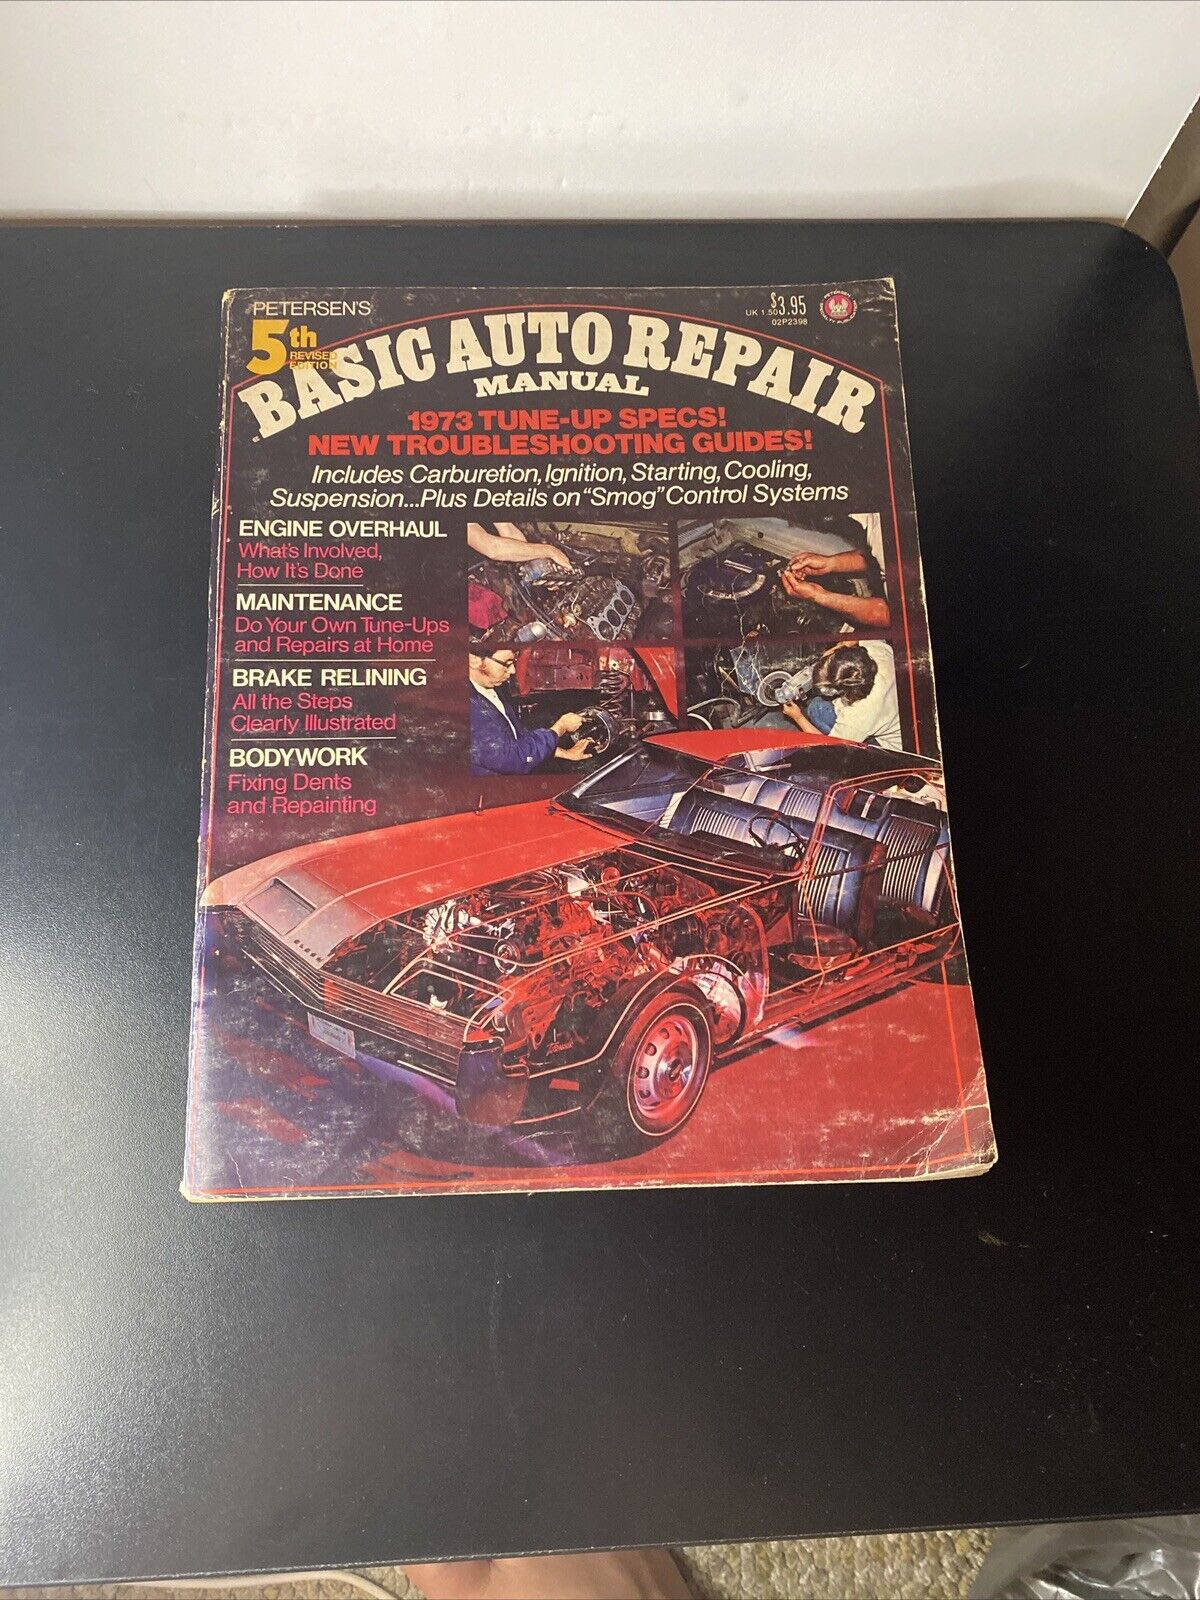 U6. Petersen's Basic Auto Repair Manual 1973 5th maintenance troubleshooting 